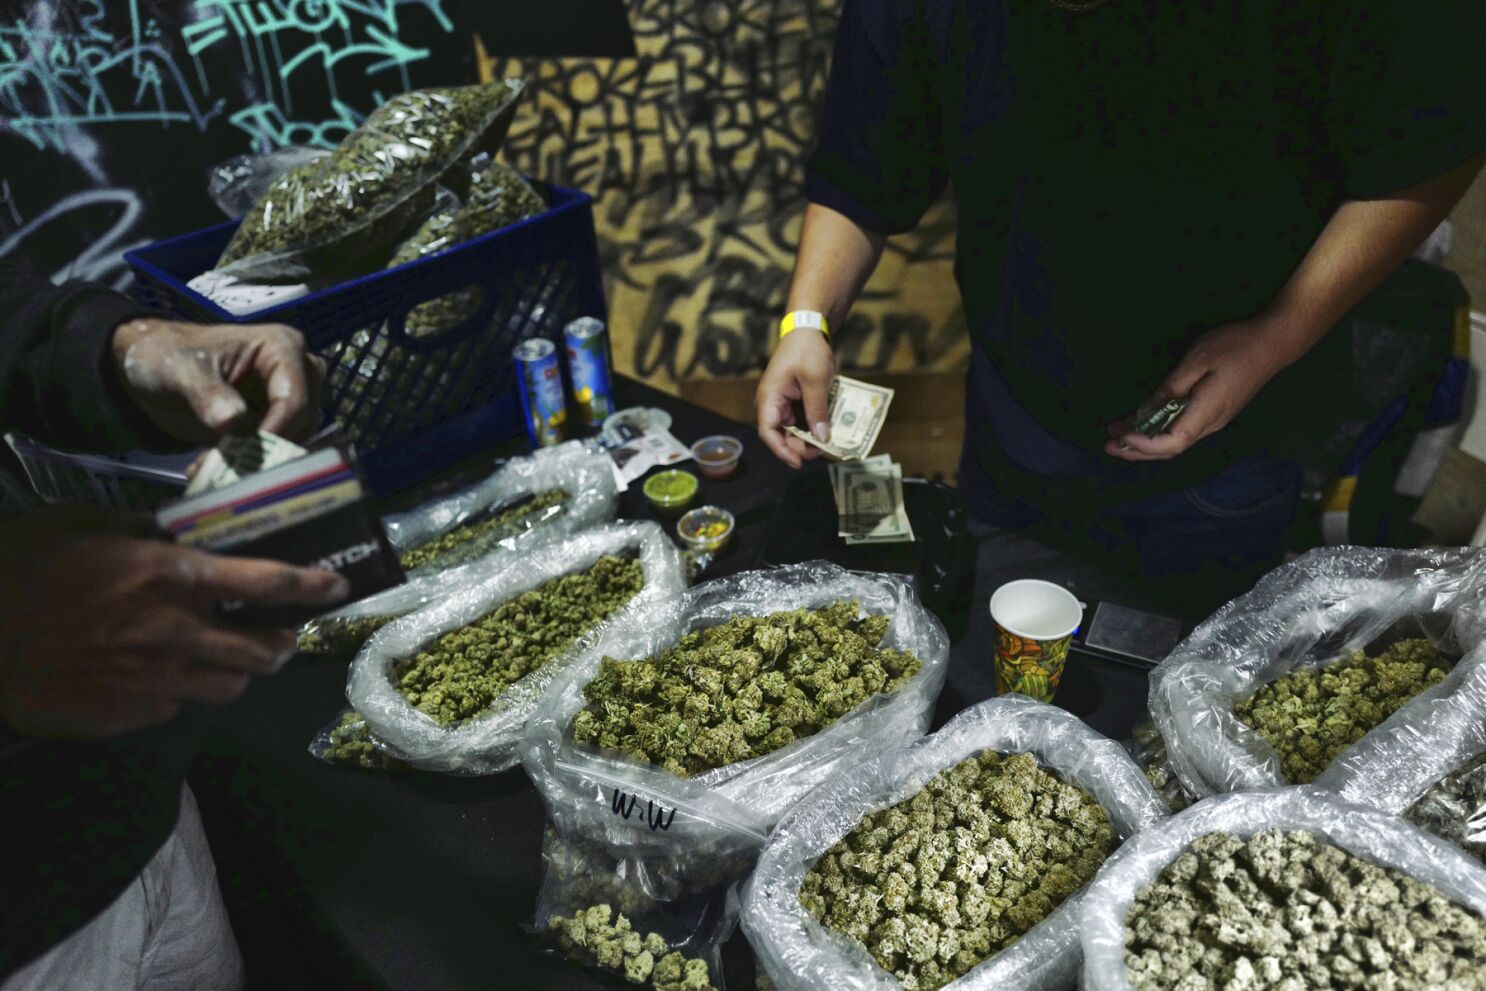 Los Angeles County Authorities Seize Marijuana Products Worth $1.3 Million